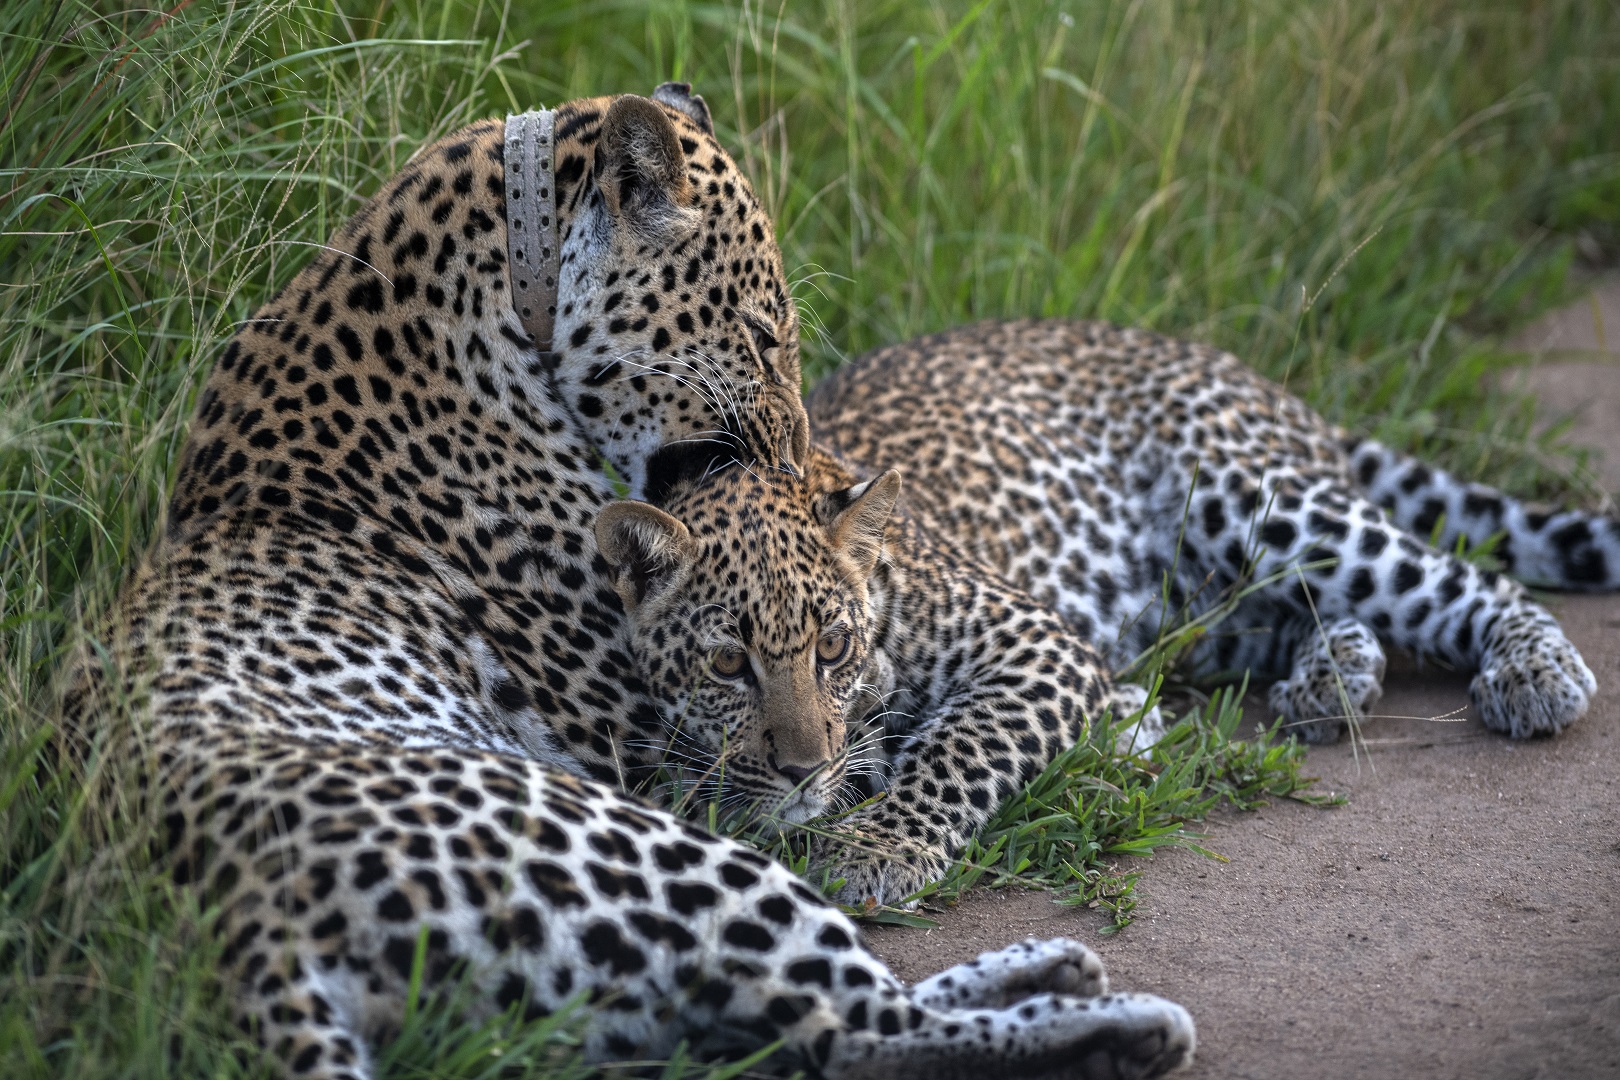 Playful leopards